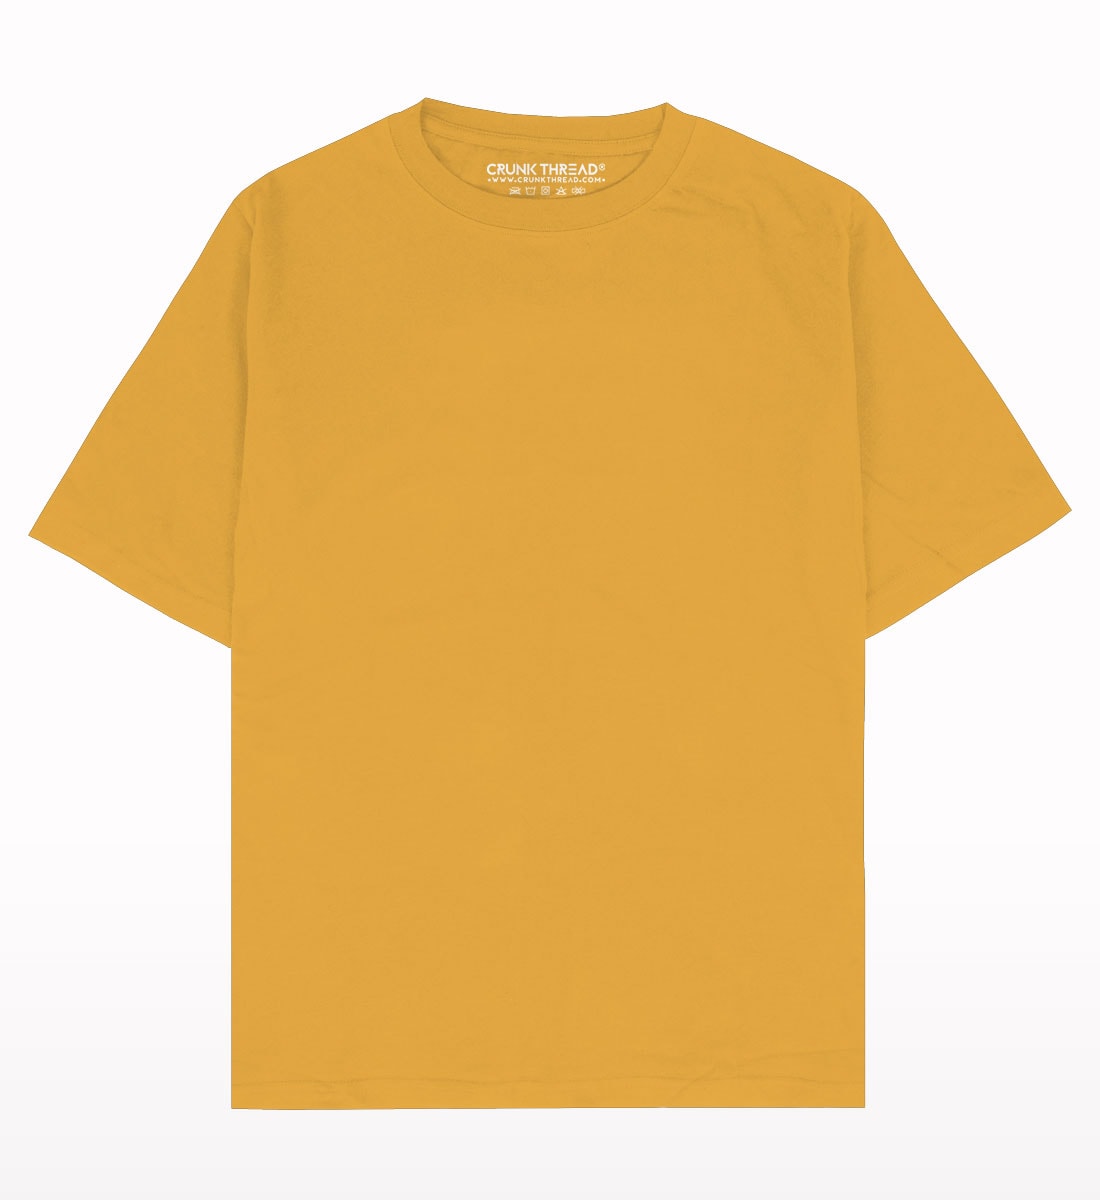 Unisex Oversized Plain Mustard T-shirt - Crunkthread.com